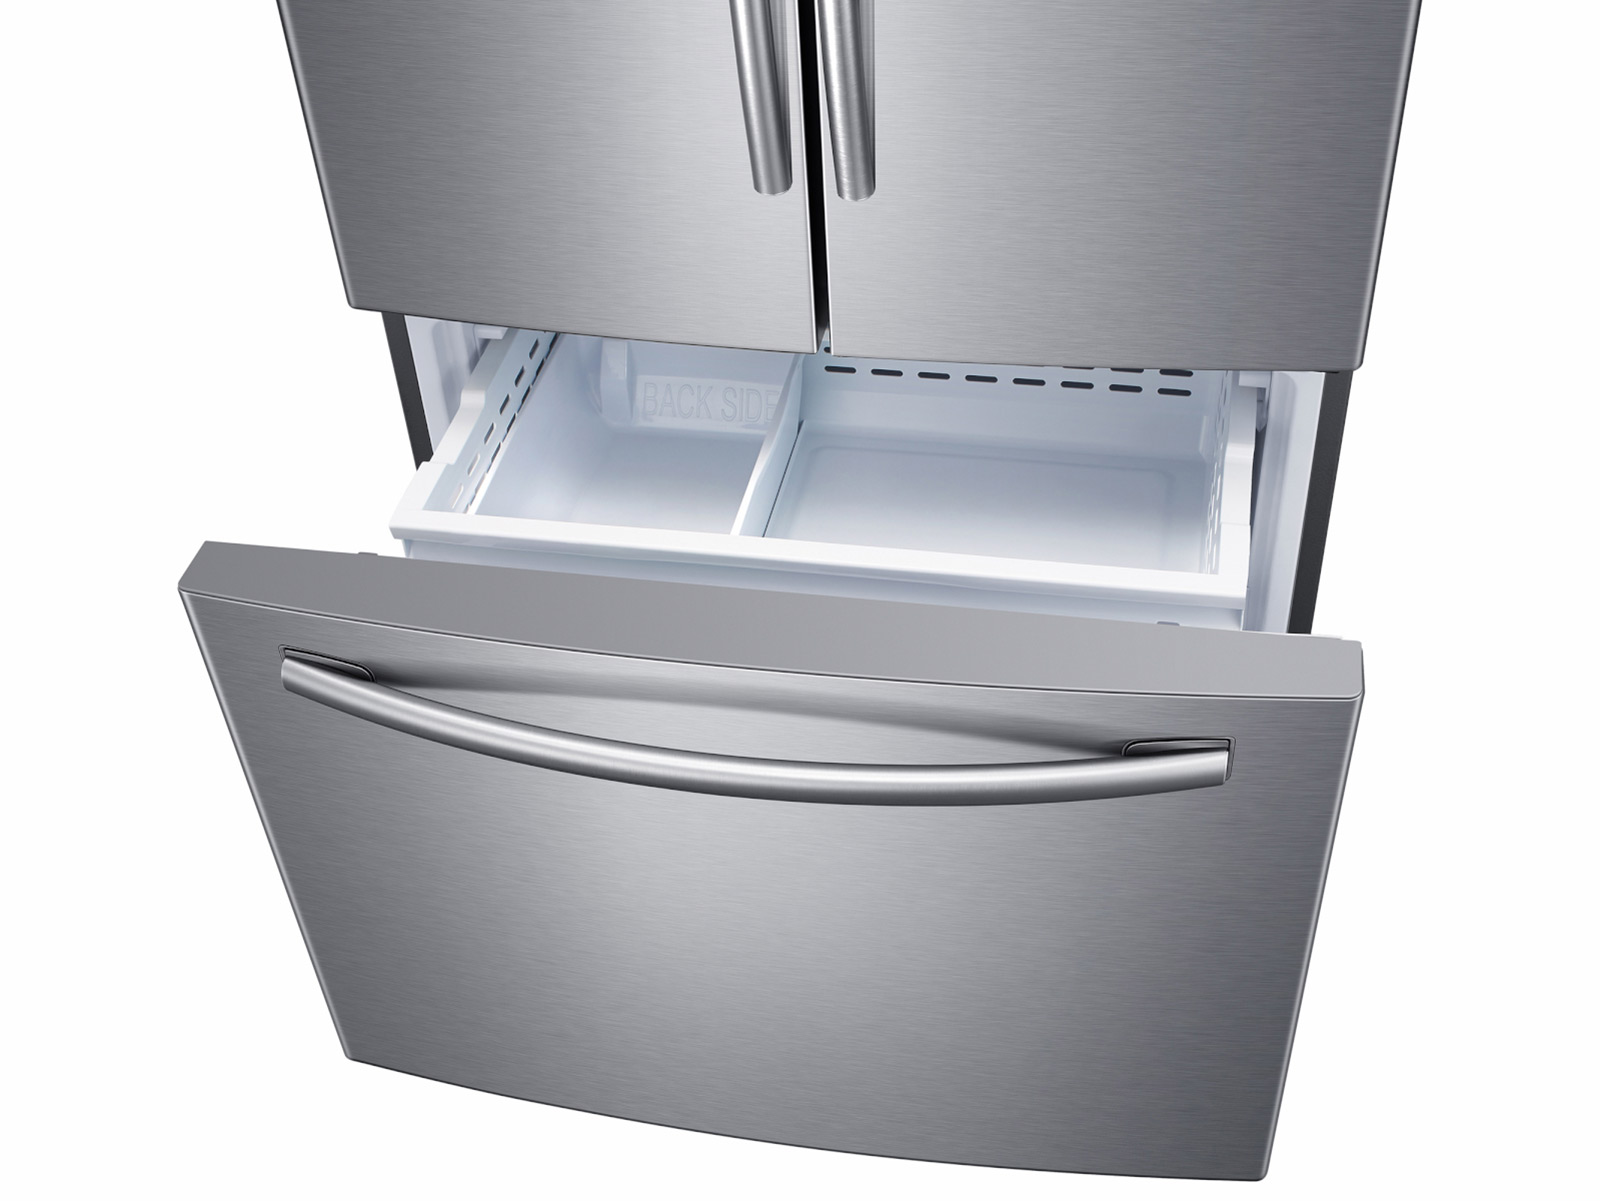 Samsung Refrigerator In-Depth Review (Model RF261BEAESR) - Prudent Reviews